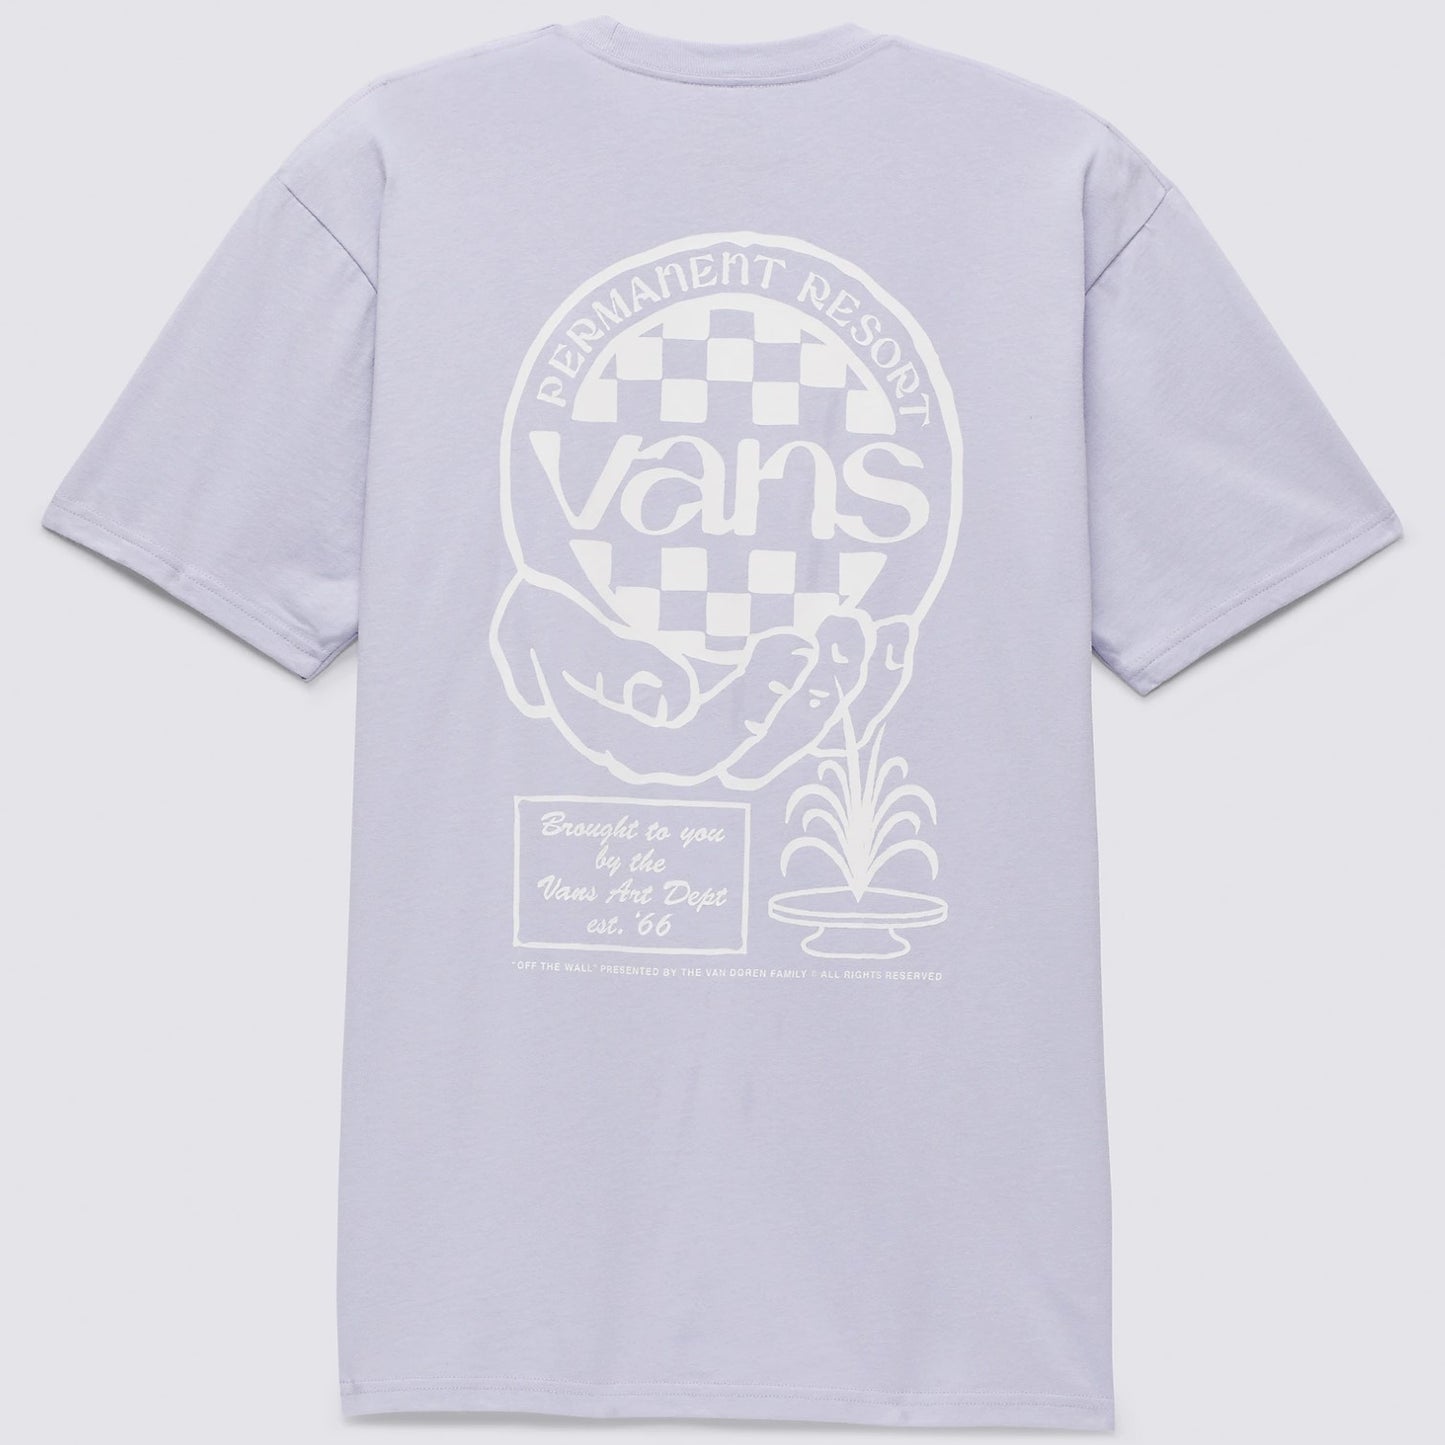 VANS Hand Circle Graphic T-Shirt